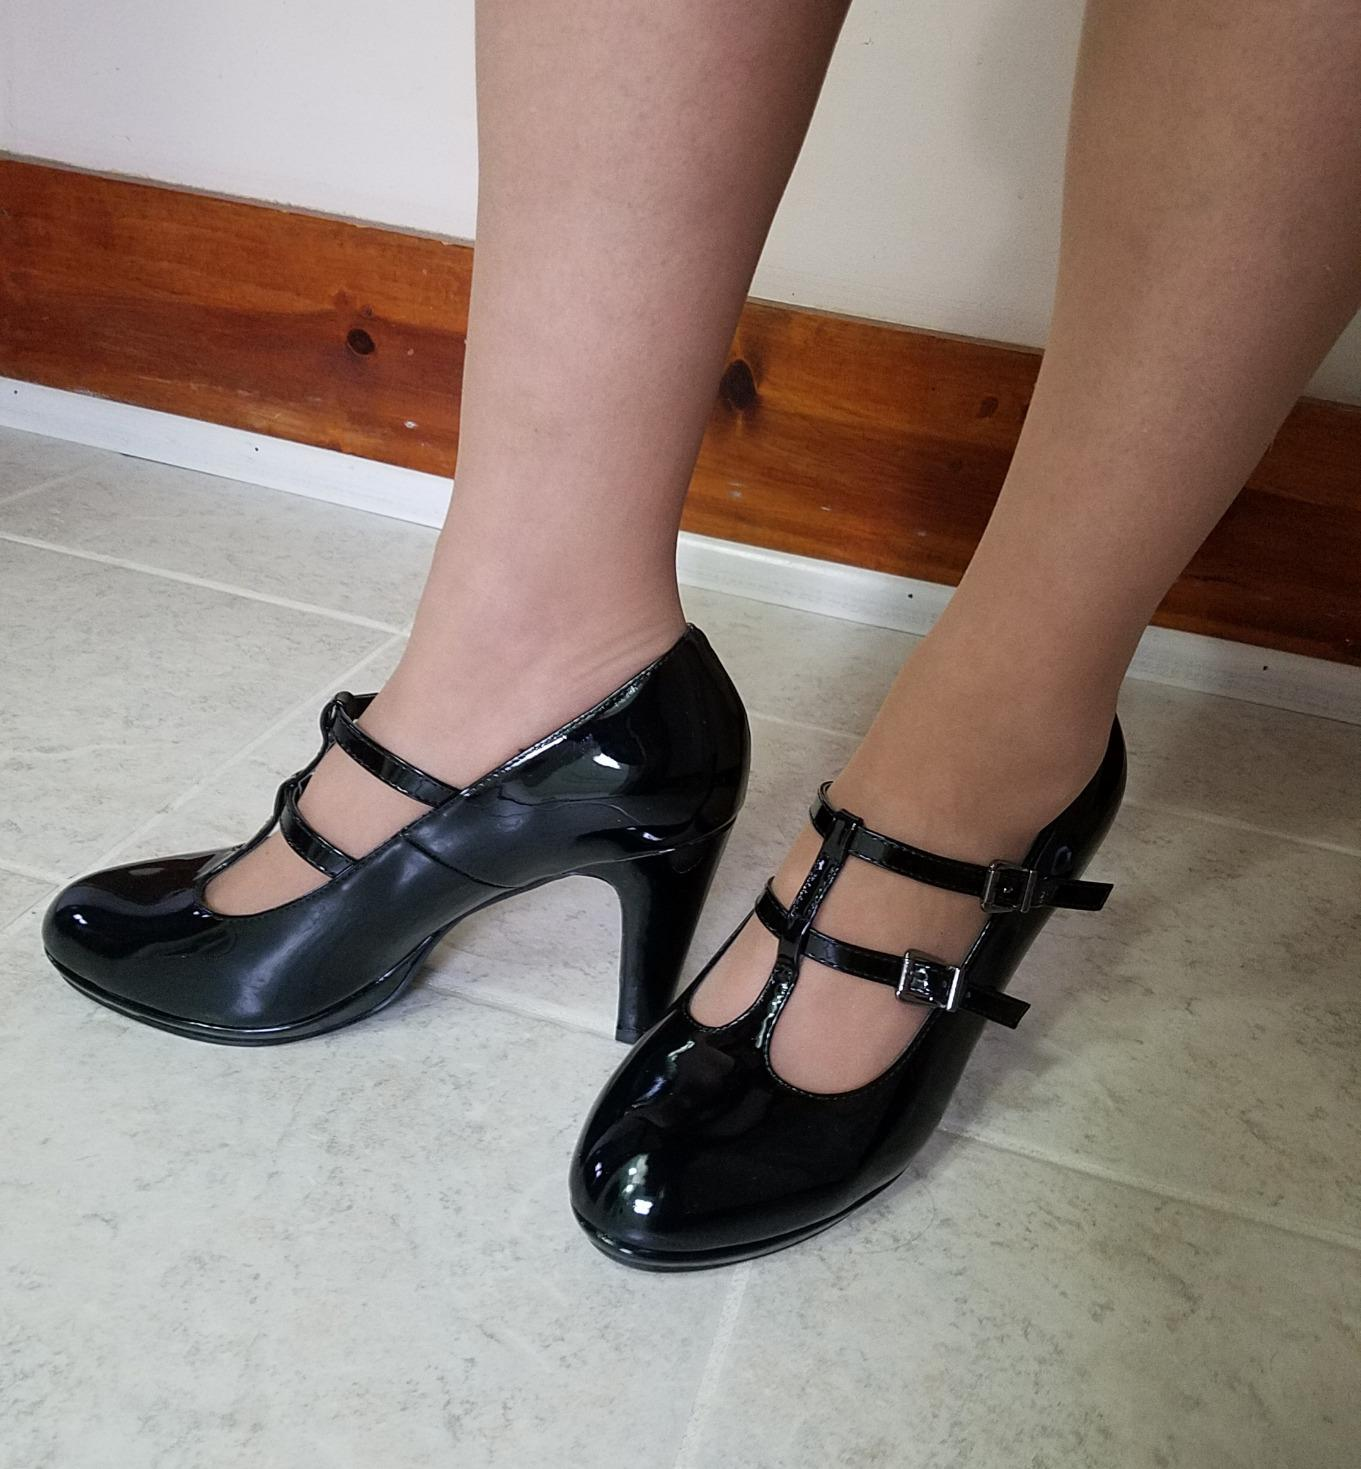 Vivaia Mary Jane Pumps black-nude allover print elegant Shoes Pumps Mary Jane Pumps 